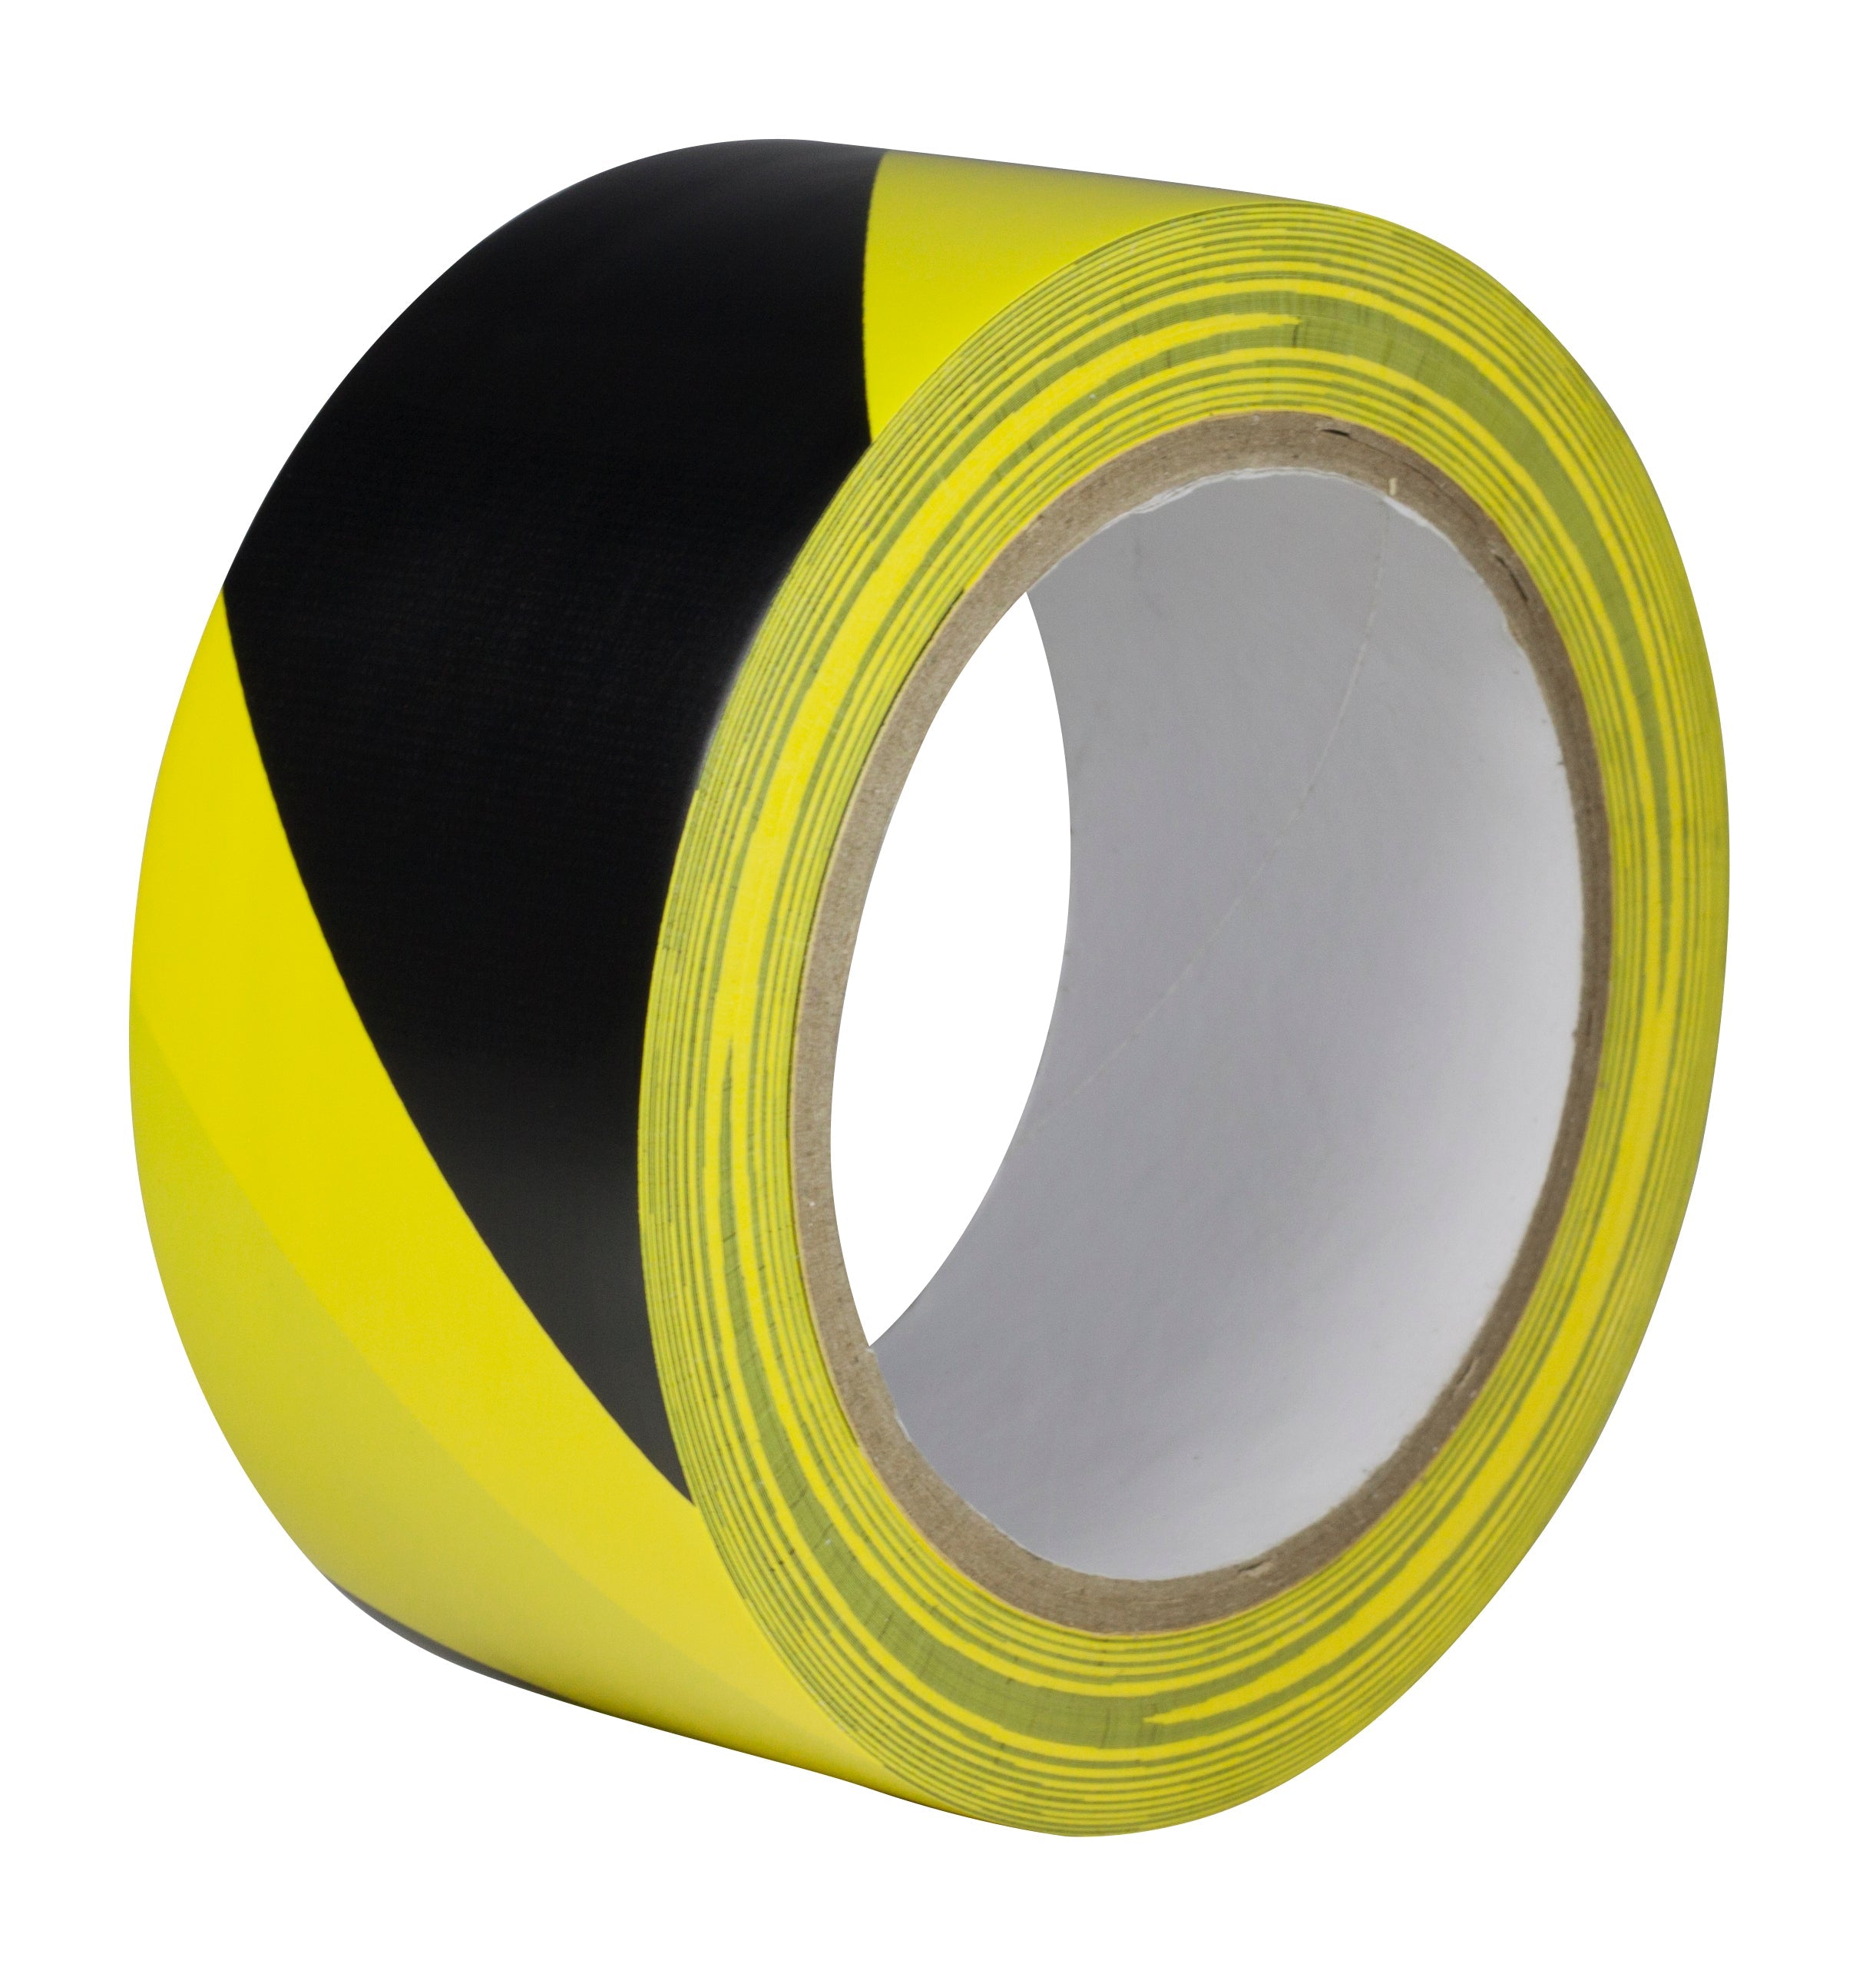 Adhesive Hazard Warning Tape (BLACK/YELLOW) 50mm x 33m